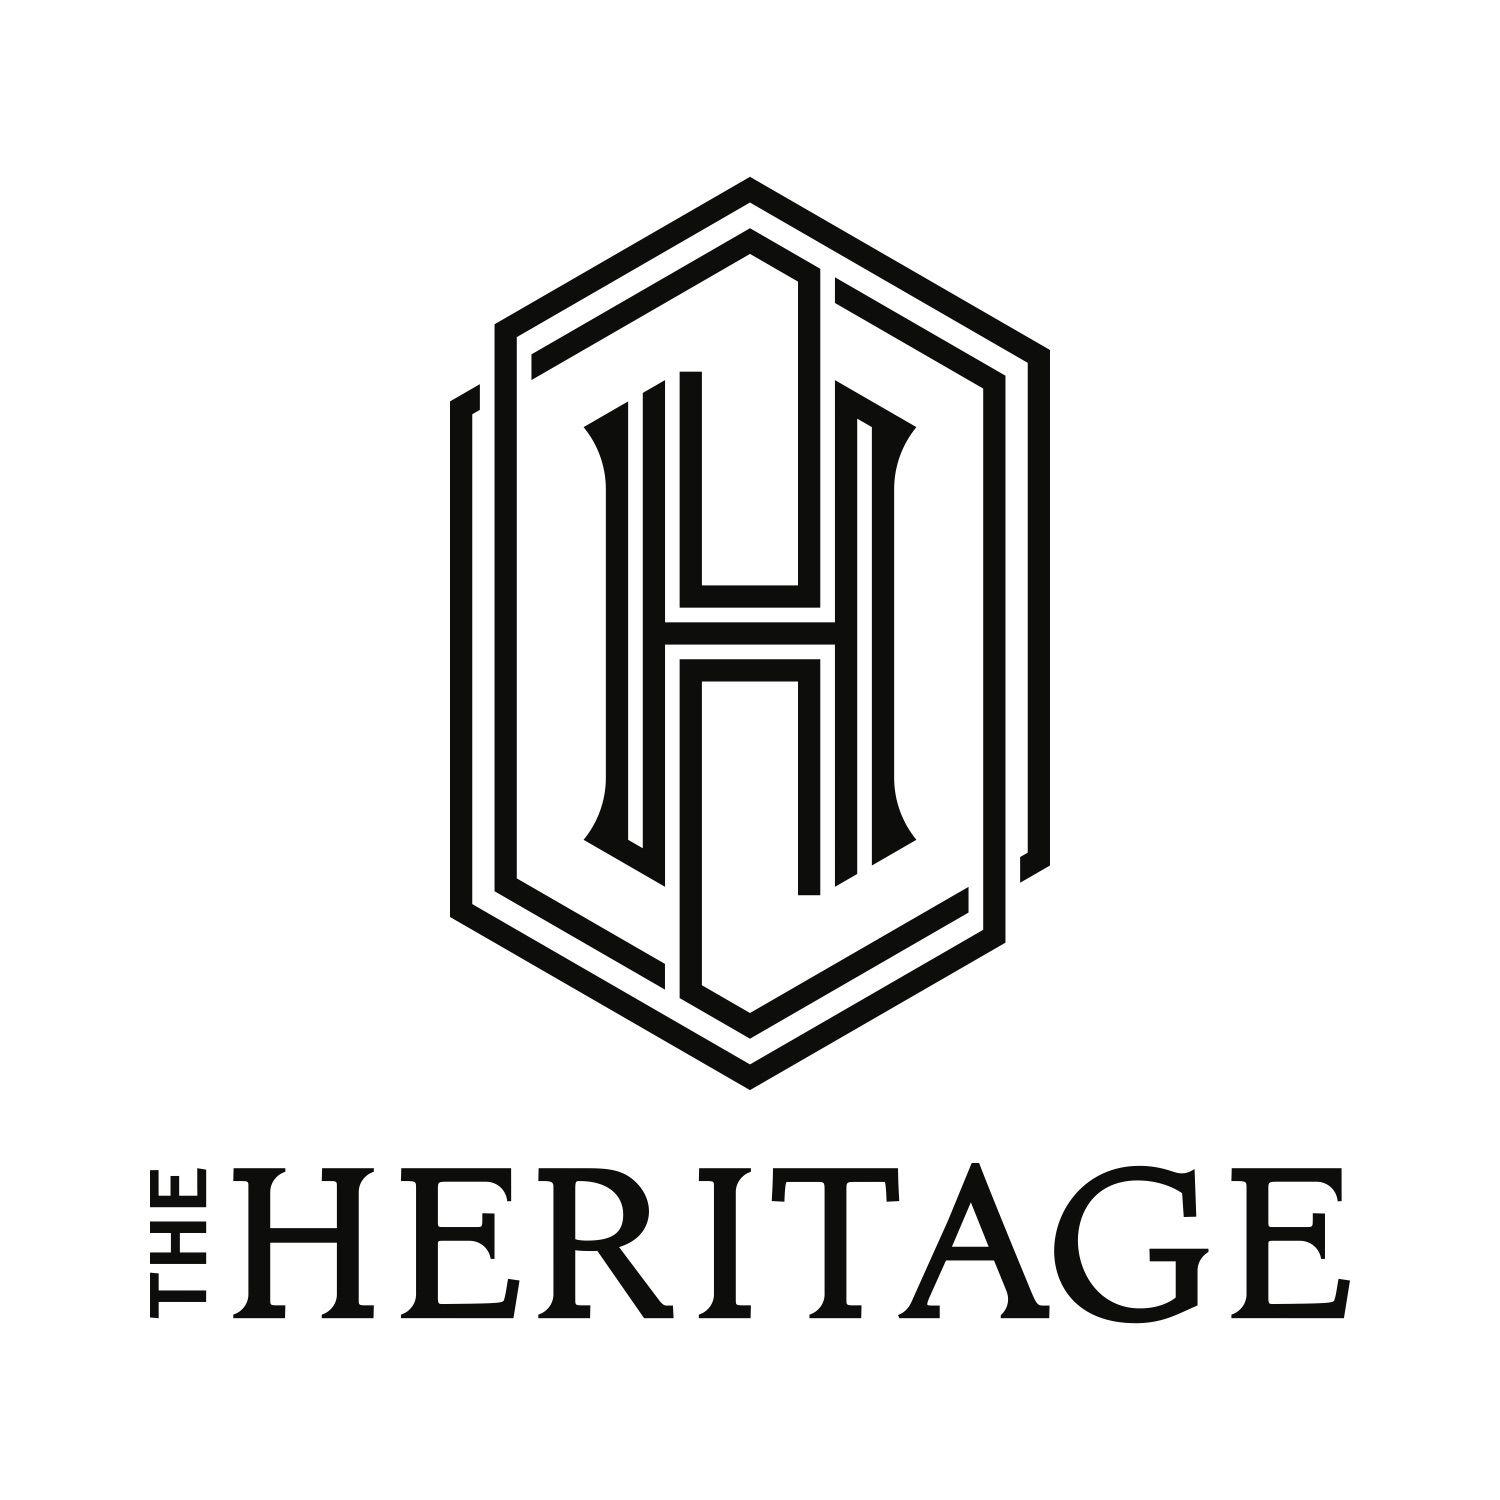 Heritage Logo - The Heritage Branding Wins Awards :: Heritage Trust Company